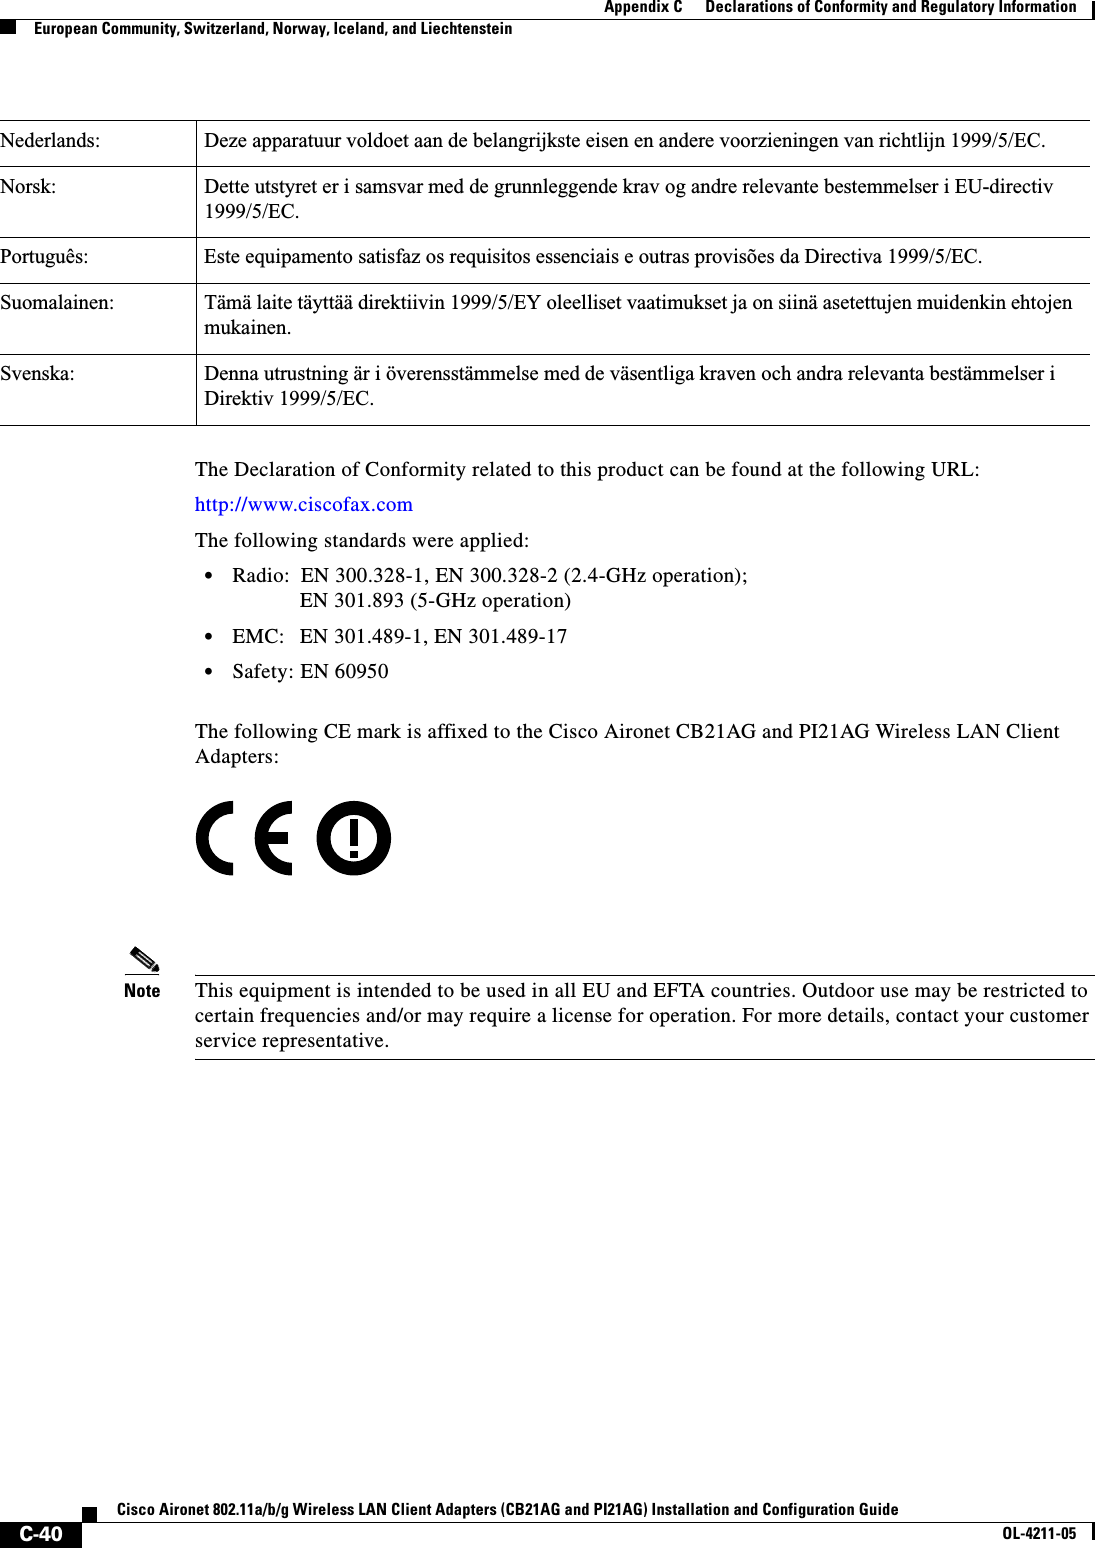 C-40Cisco Aironet 802.11a/b/g Wireless LAN Client Adapters (CB21AG and PI21AG) Installation and Configuration GuideOL-4211-05Appendix C      Declarations of Conformity and Regulatory InformationEuropean Community, Switzerland, Norway, Iceland, and LiechtensteinThe Declaration of Conformity related to this product can be found at the following URL:http://www.ciscofax.comThe following standards were applied:•Radio: EN 300.328-1, EN 300.328-2 (2.4-GHz operation);EN 301.893 (5-GHz operation)•EMC: EN 301.489-1, EN 301.489-17•Safety: EN 60950The following CE mark is affixed to the Cisco Aironet CB21AG and PI21AG Wireless LAN Client Adapters:Note This equipment is intended to be used in all EU and EFTA countries. Outdoor use may be restricted to certain frequencies and/or may require a license for operation. For more details, contact your customer service representative.Nederlands: Deze apparatuur voldoet aan de belangrijkste eisen en andere voorzieningen van richtlijn 1999/5/EC.Norsk: Dette utstyret er i samsvar med de grunnleggende krav og andre relevante bestemmelser i EU-directiv 1999/5/EC.Português: Este equipamento satisfaz os requisitos essenciais e outras provisões da Directiva 1999/5/EC.Suomalainen: Tämä laite täyttää direktiivin 1999/5/EY oleelliset vaatimukset ja on siinä asetettujen muidenkin ehtojen mukainen.Svenska: Denna utrustning är i överensstämmelse med de väsentliga kraven och andra relevanta bestämmelser i Direktiv 1999/5/EC.